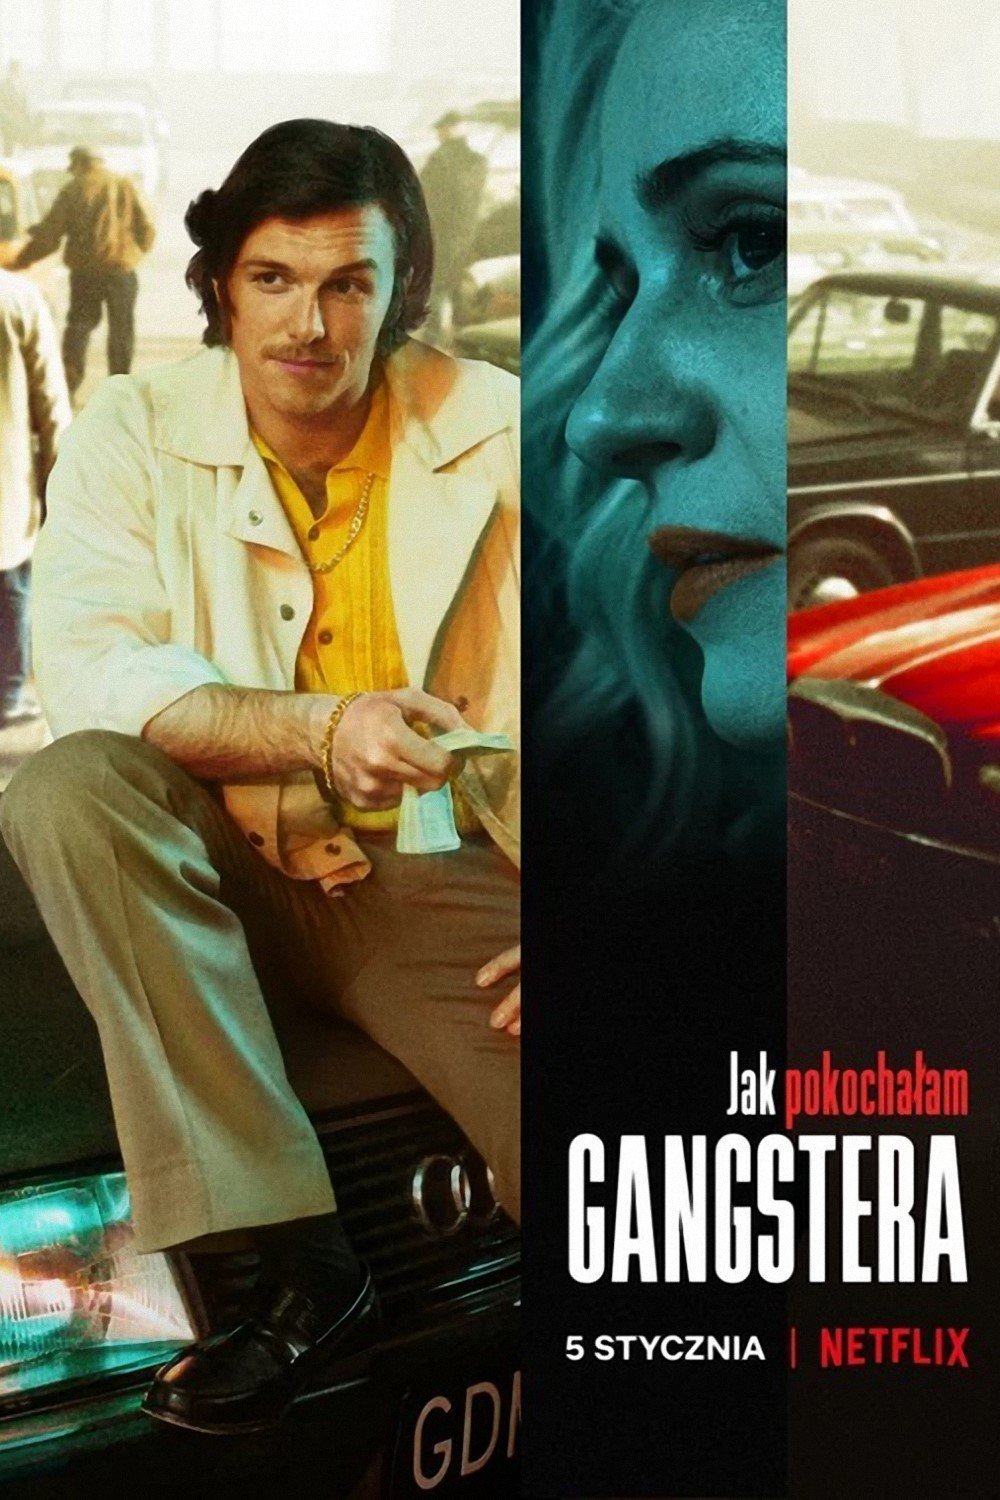 Polish poster of the movie Jak pokochalam gangstera